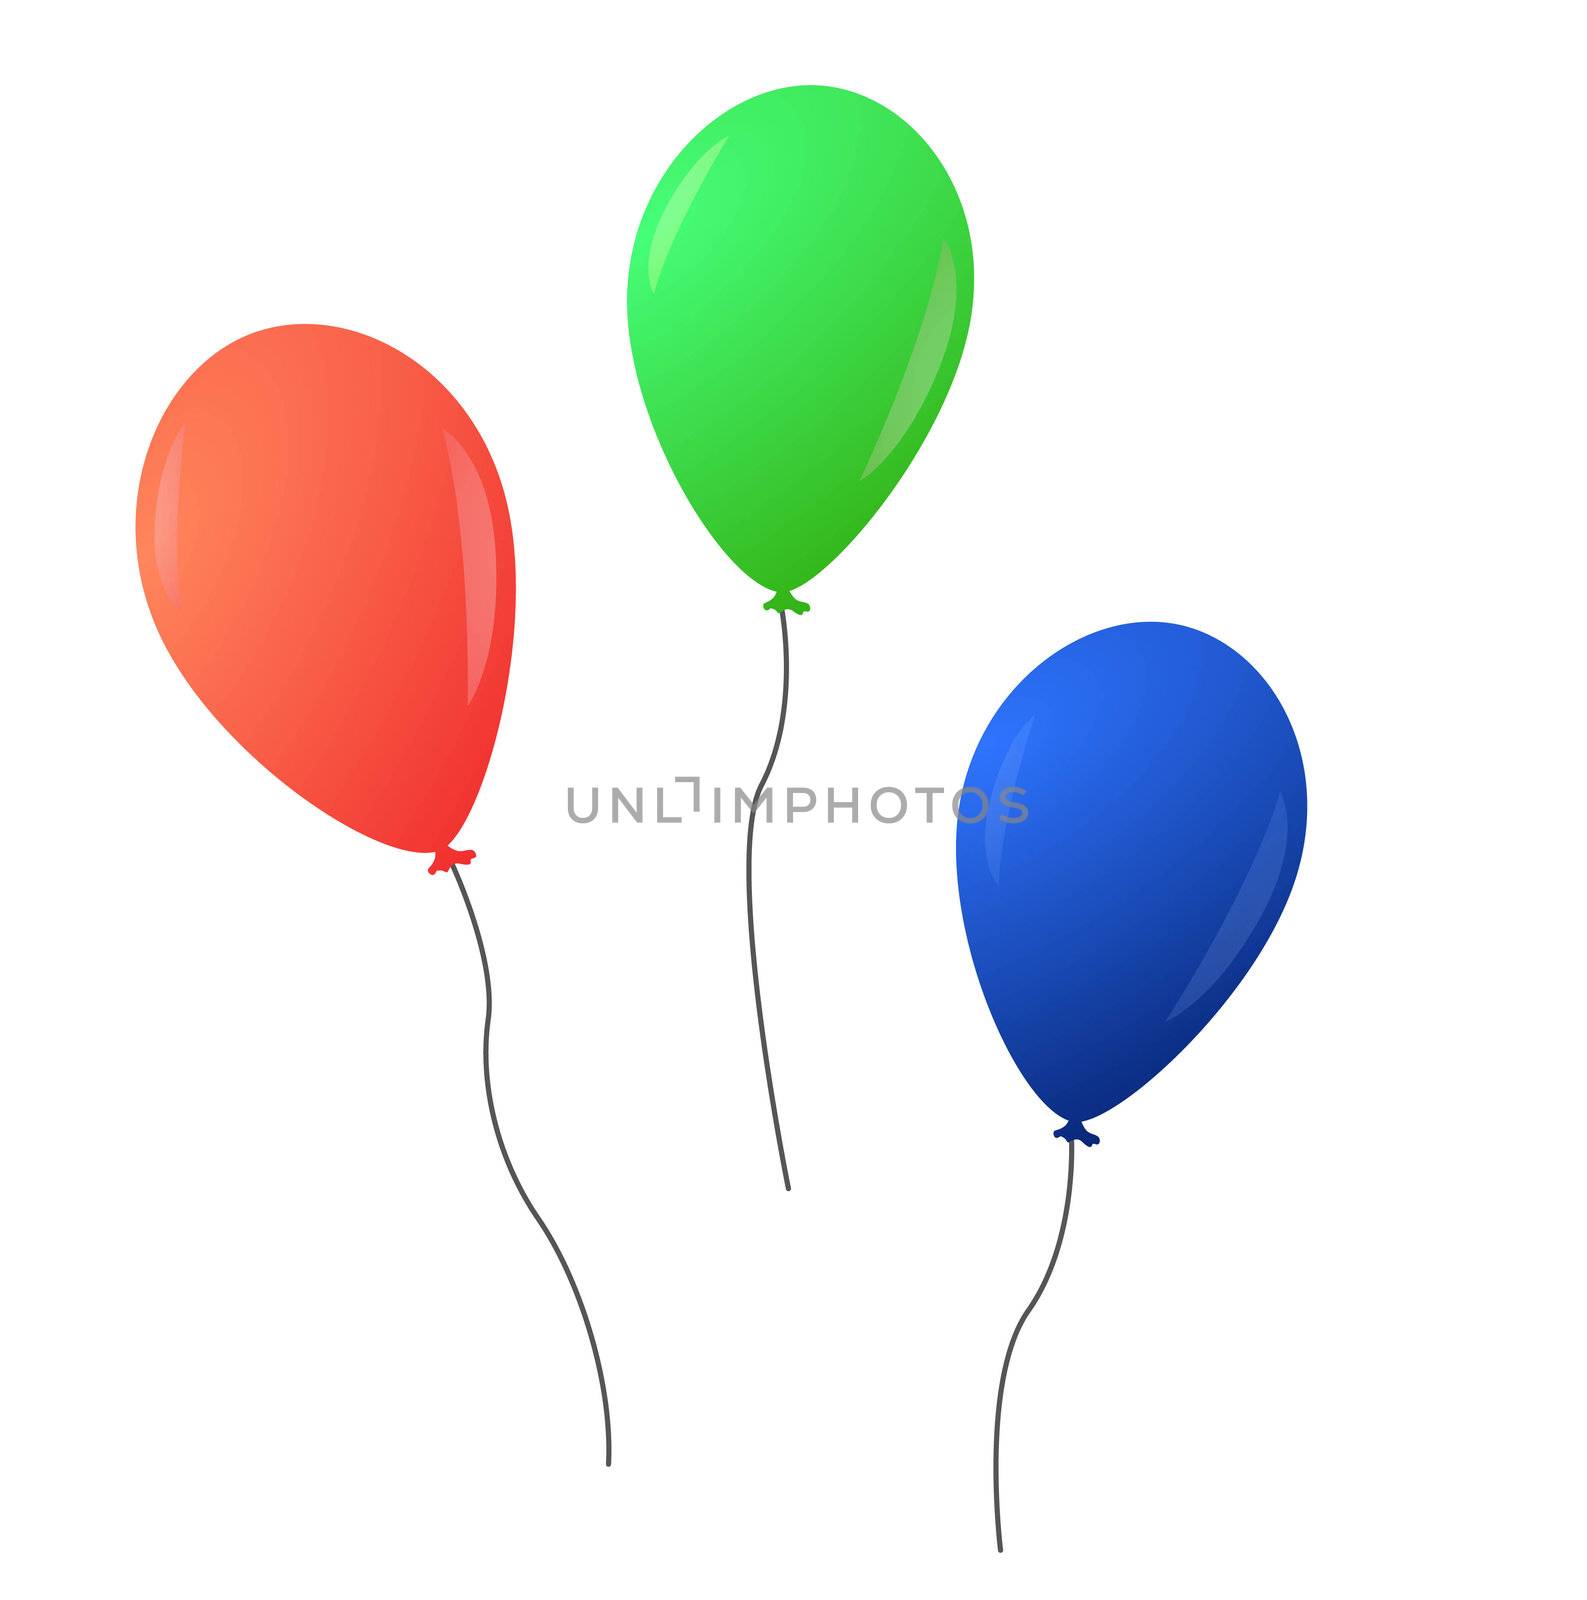 Balloons by leeser